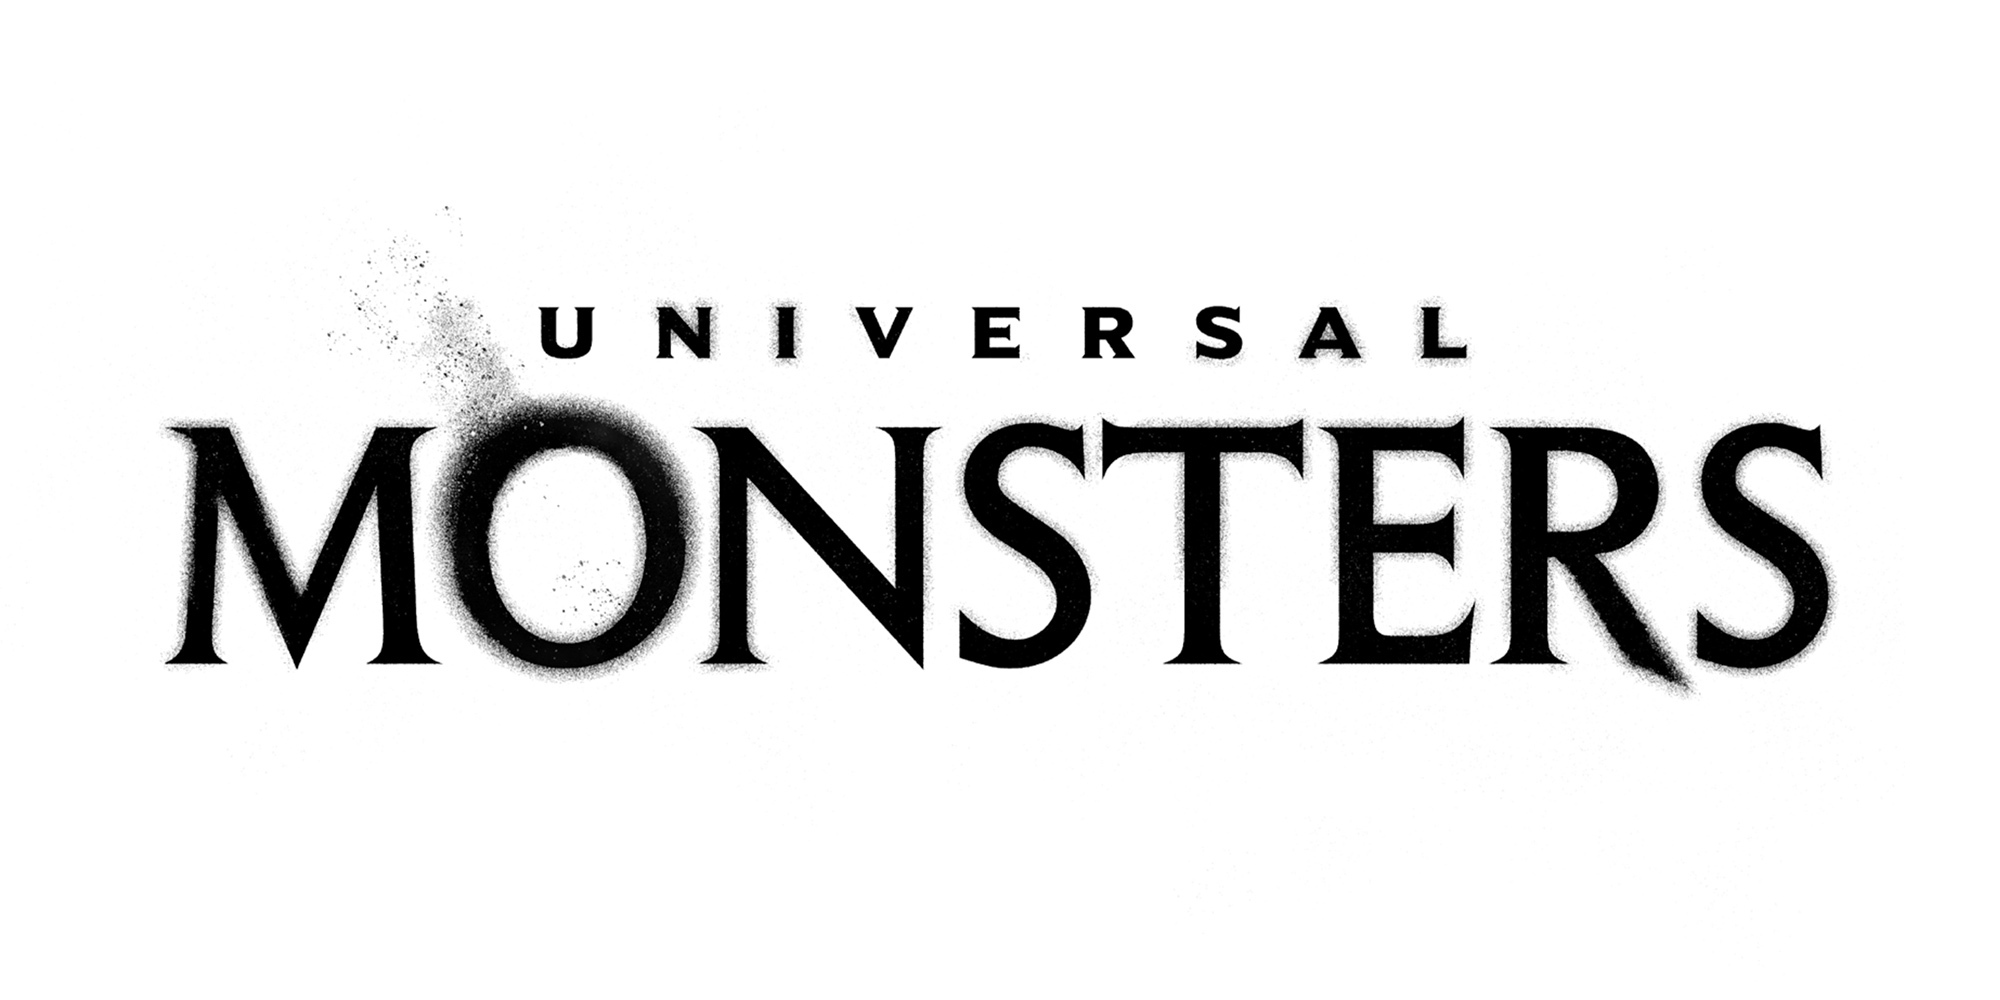 Universal monsters 03